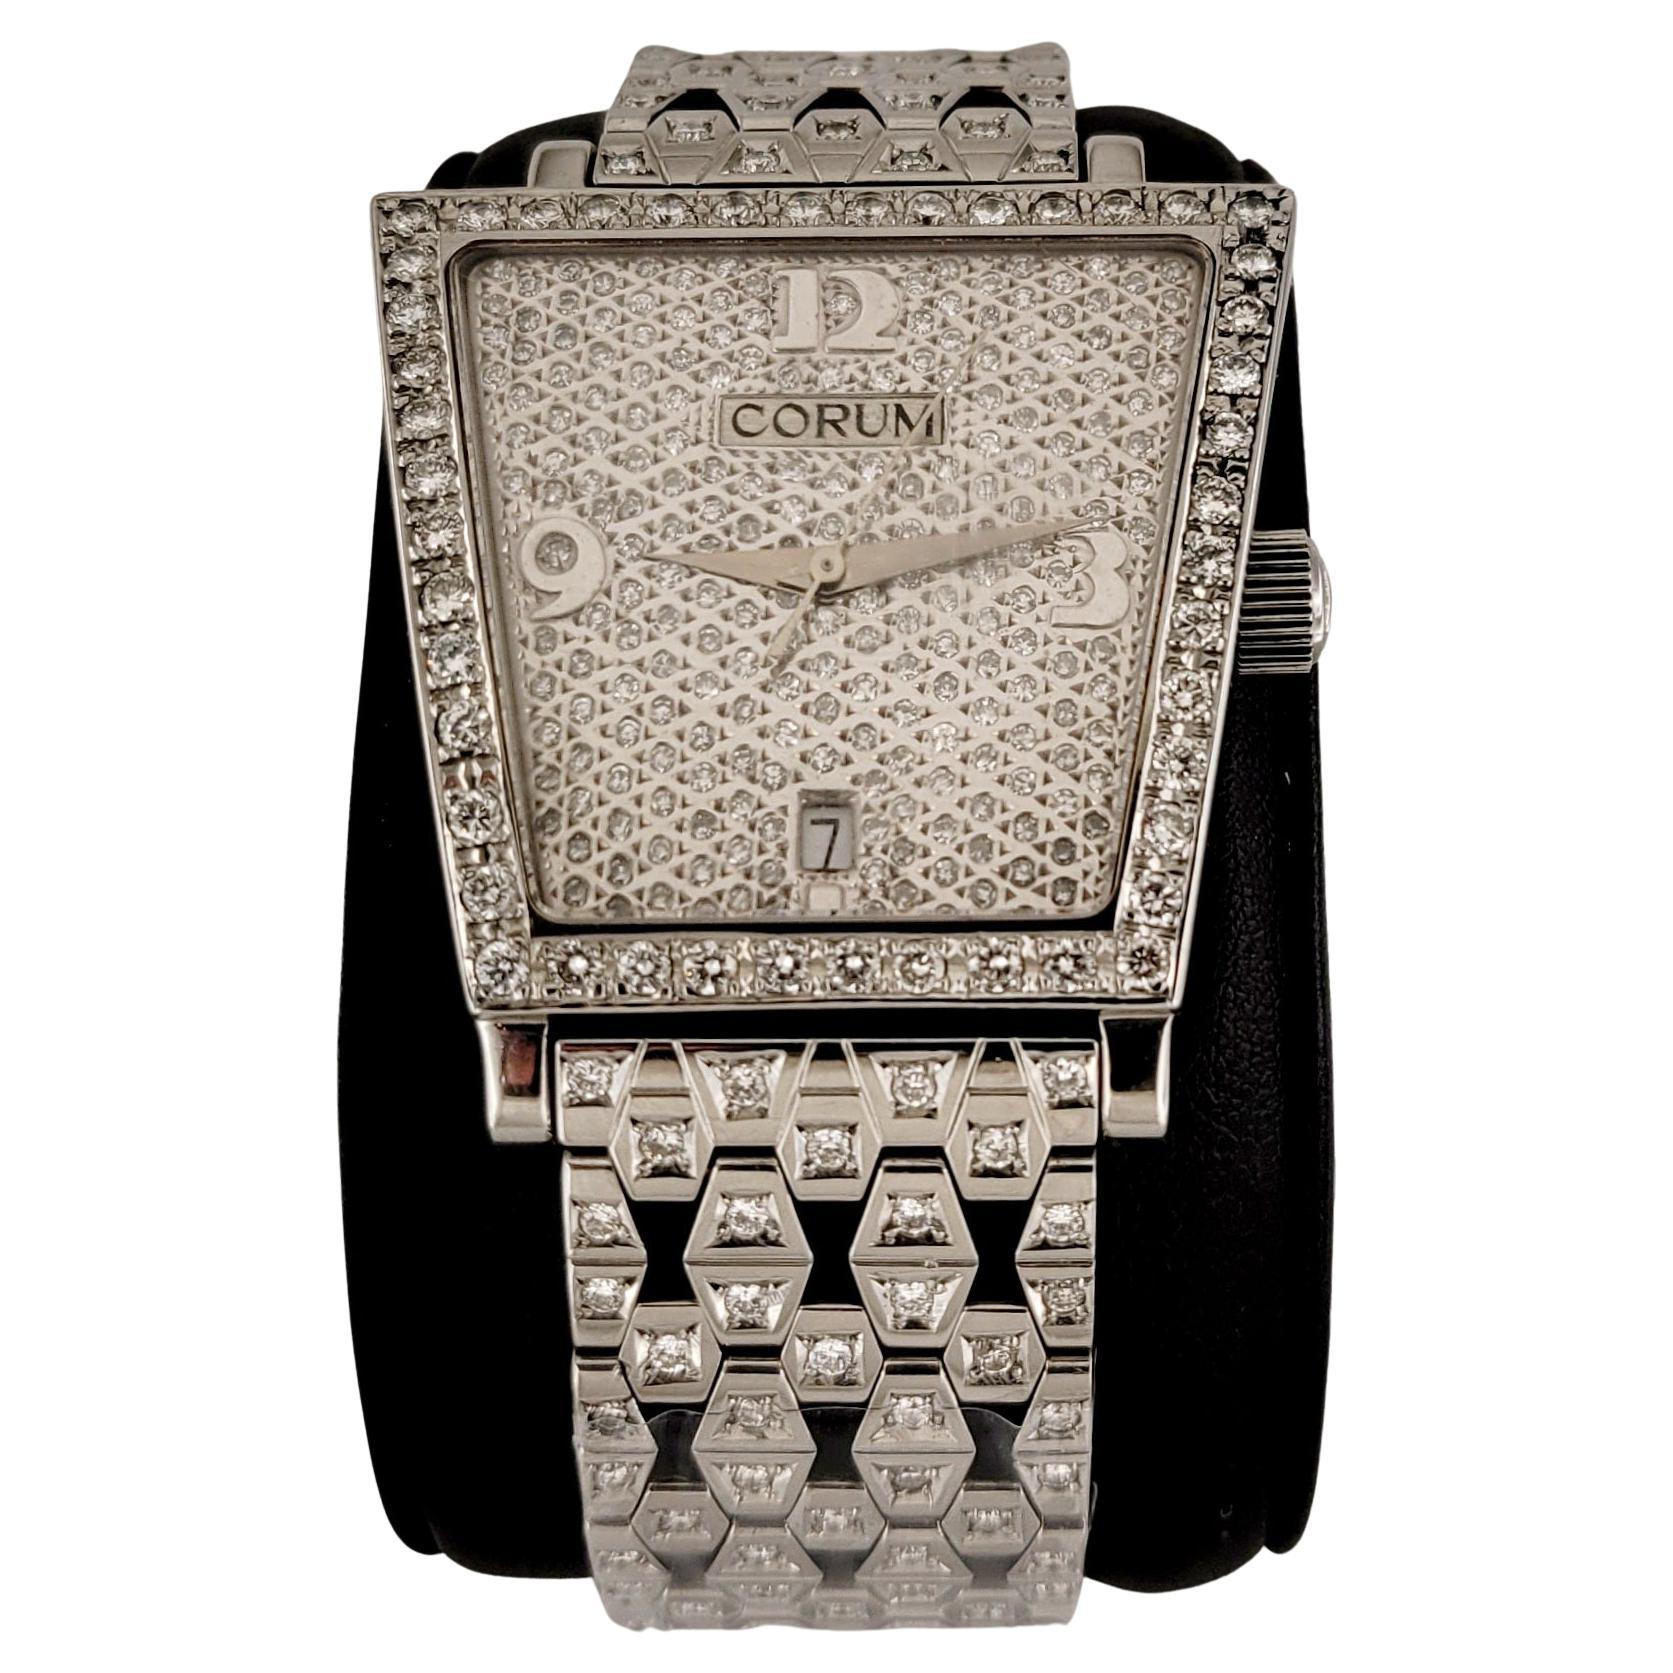 Corum Stainless Steel Watch with Diamonds